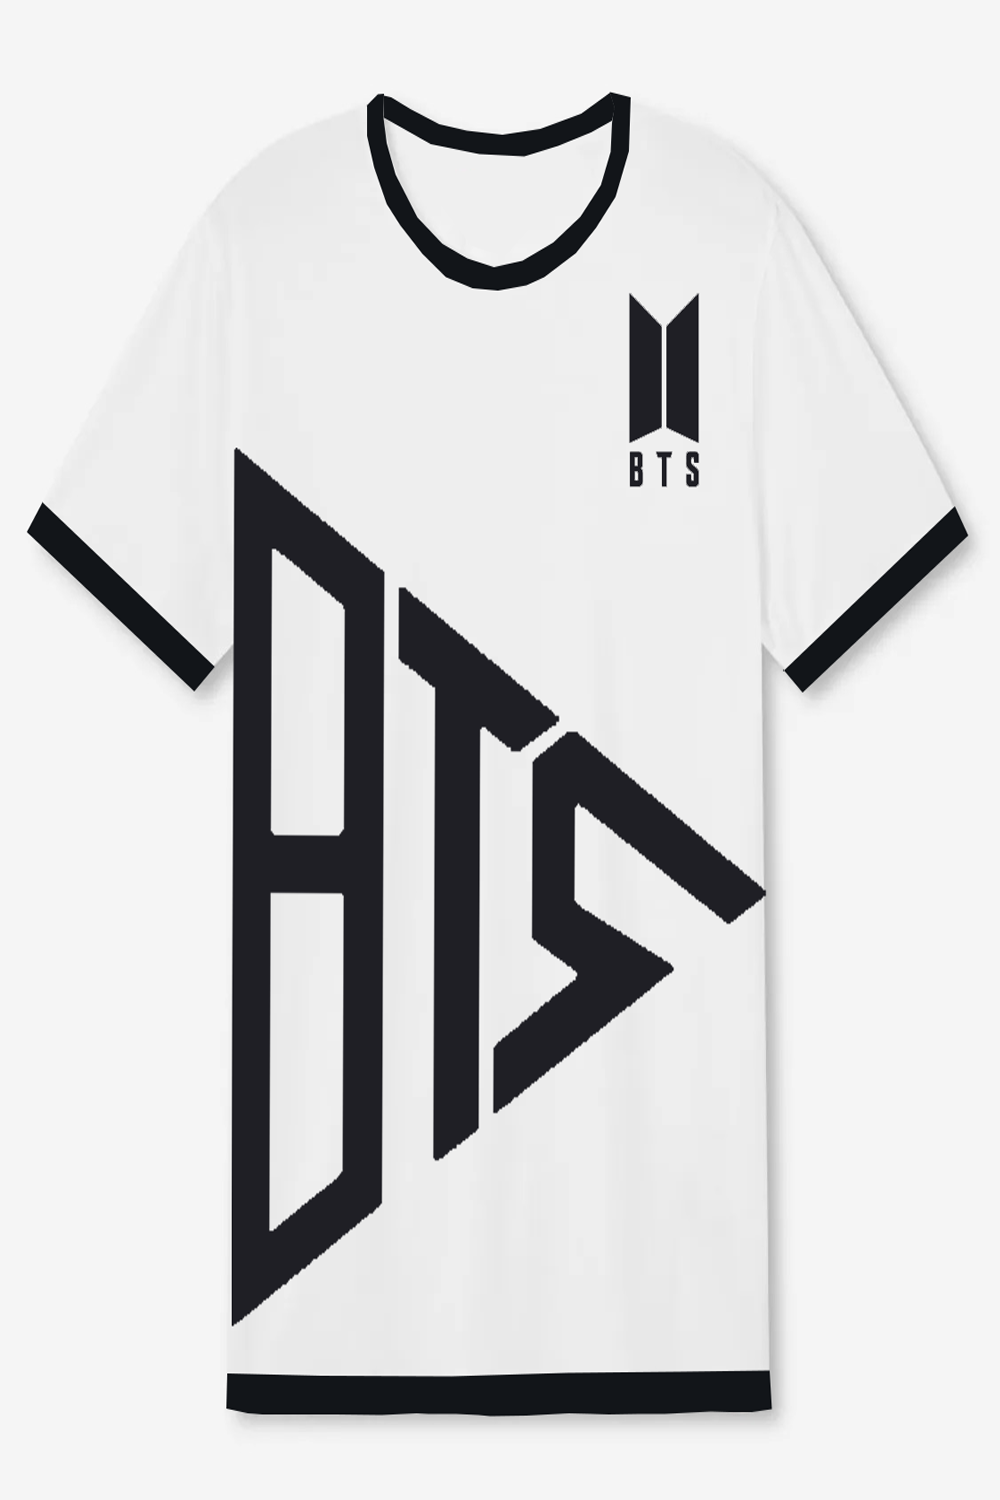 BTS T-Shirts pinterest image.